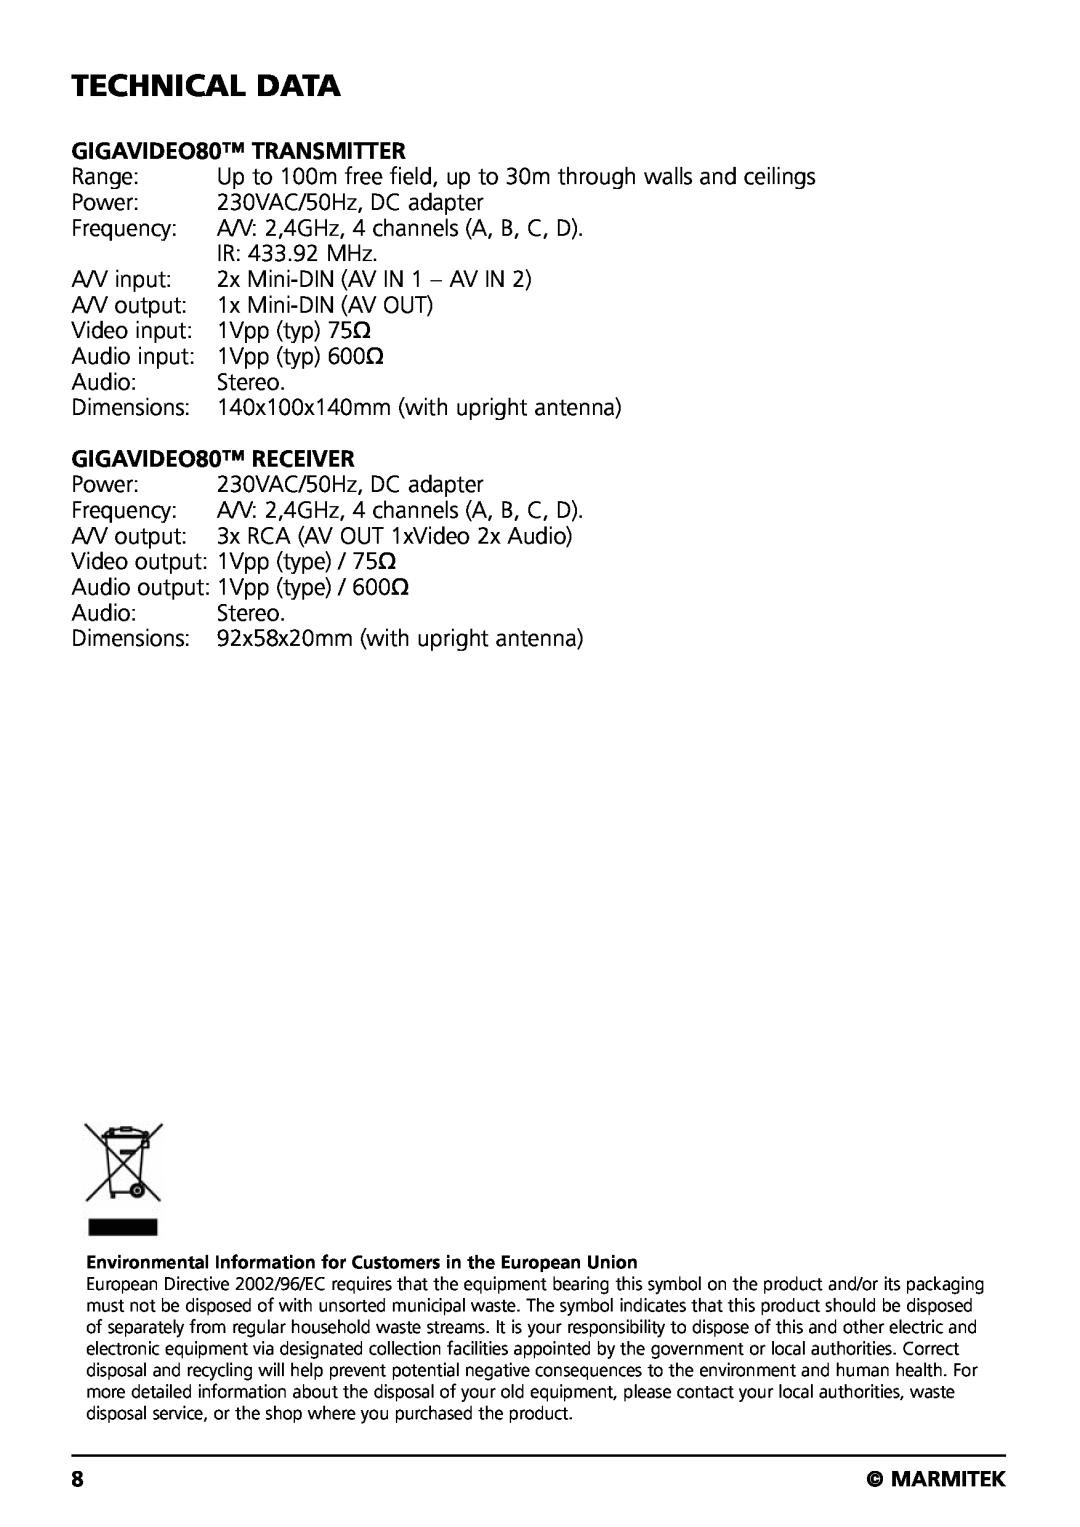 Marmitek user manual Technical Data, GIGAVIDEO80 TRANSMITTER, GIGAVIDEO80 RECEIVER 